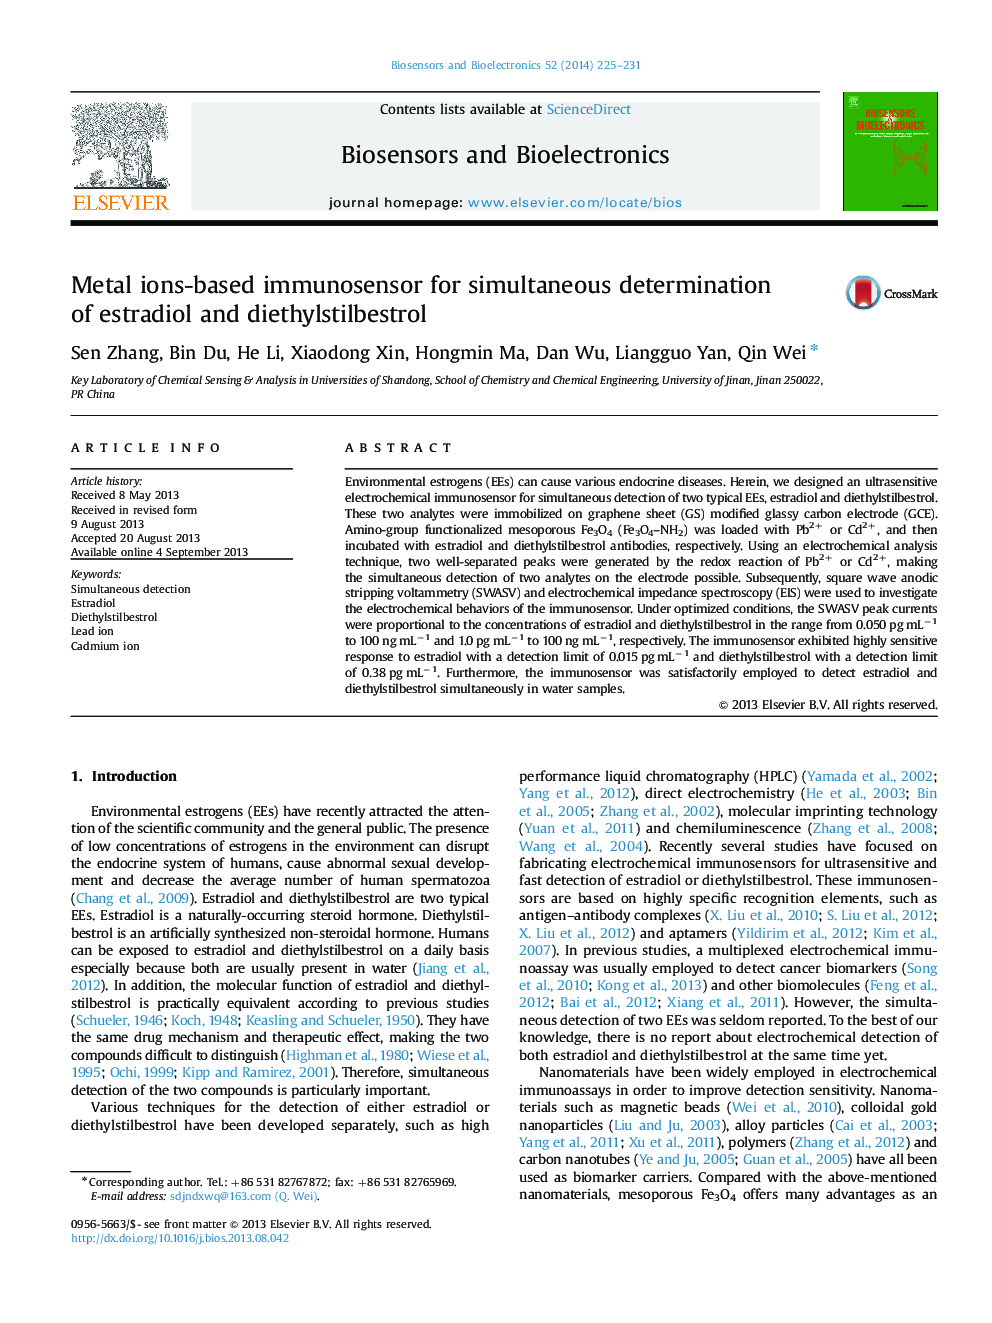 Metal ions-based immunosensor for simultaneous determination of estradiol and diethylstilbestrol